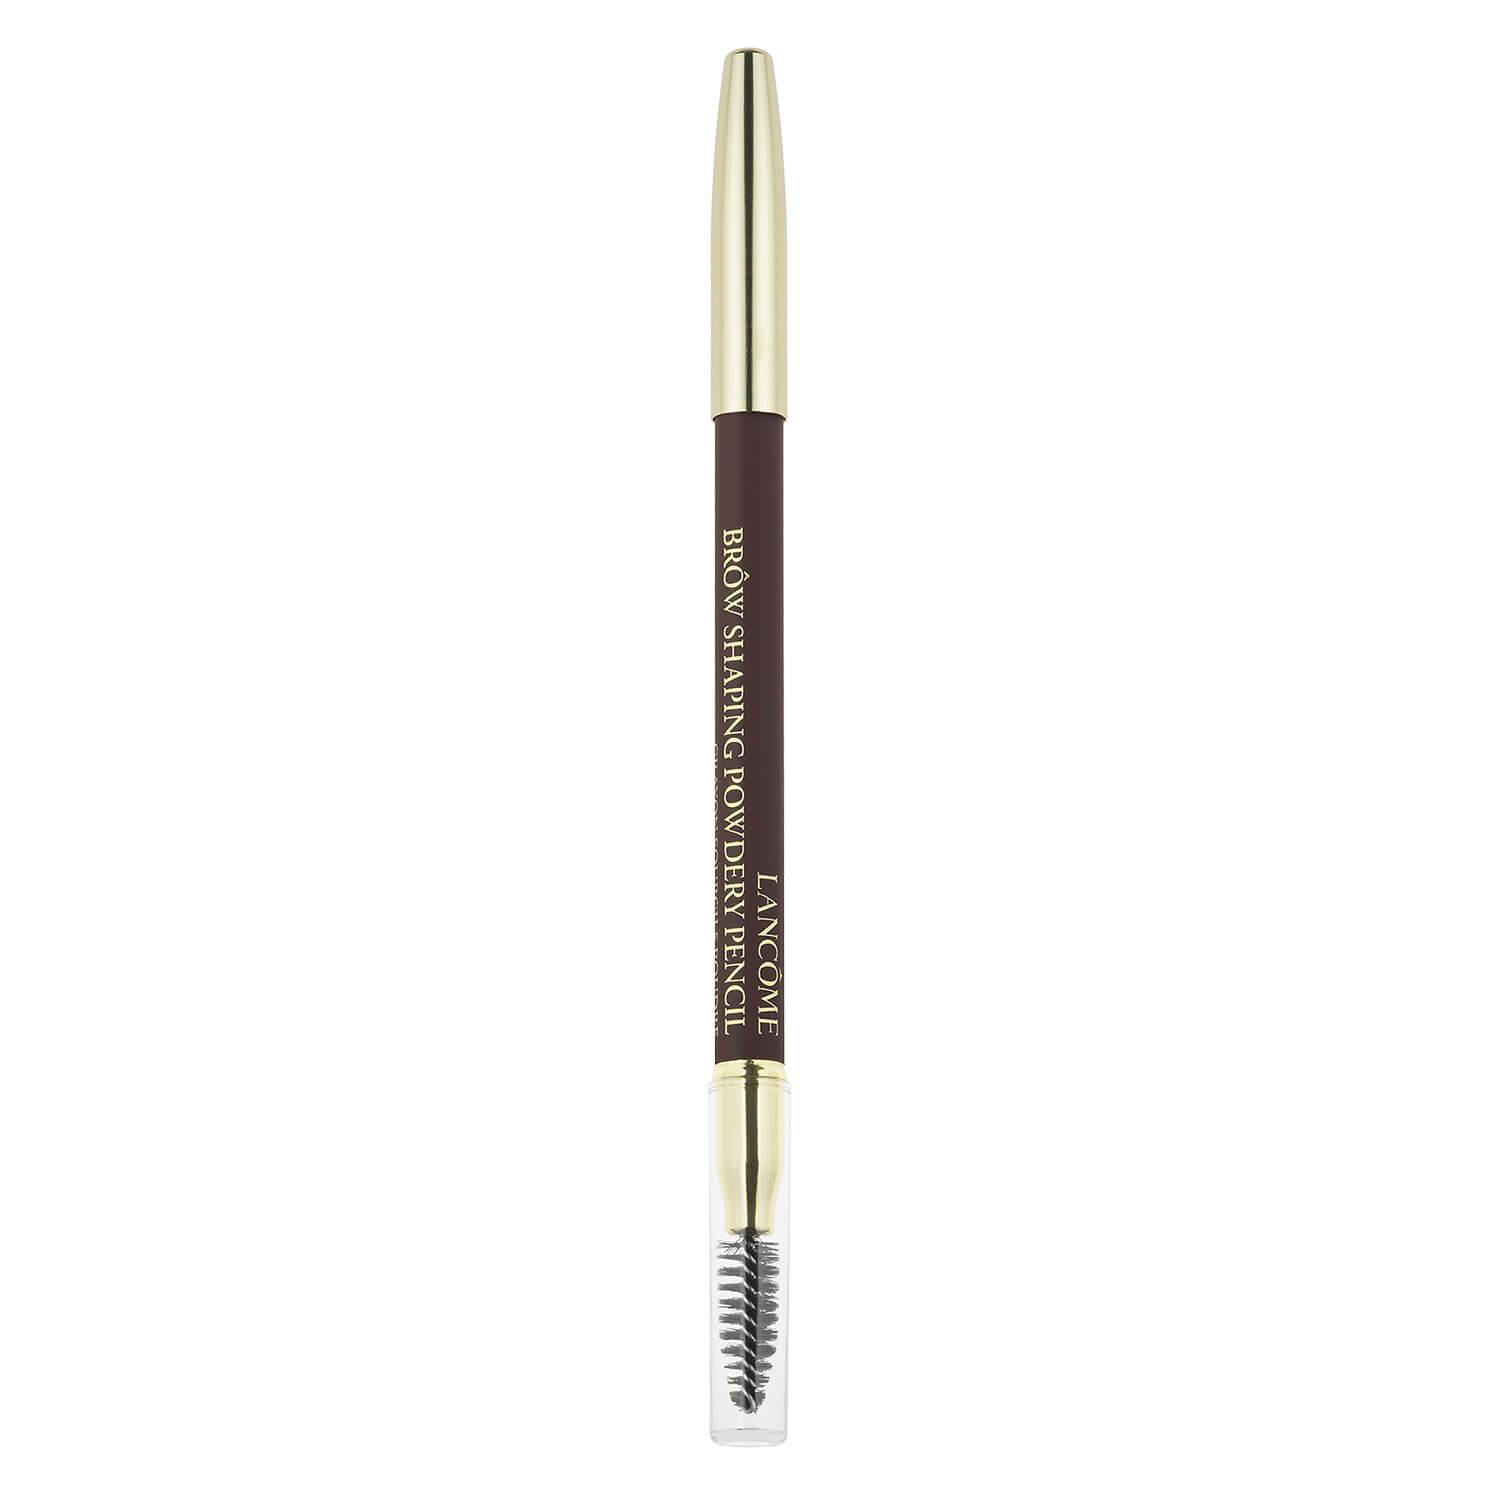 Lancôme Brows - Brow Shaping Powdery Pencil 07